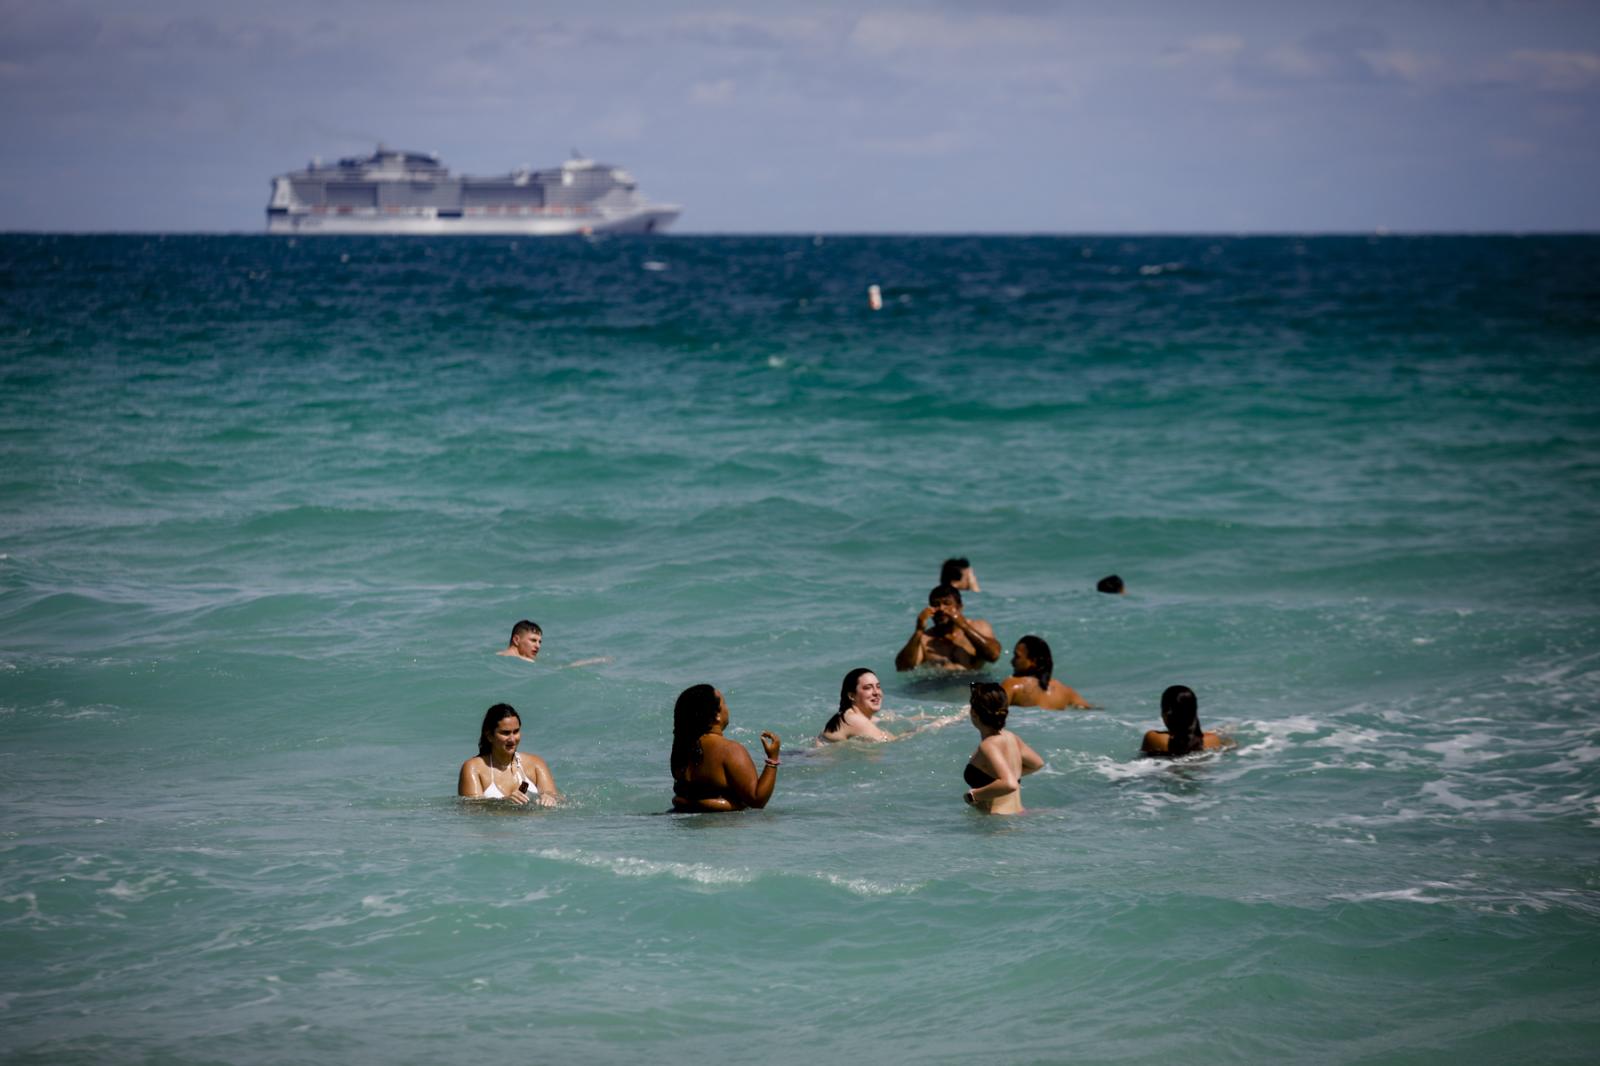 People bath in the beach during...: Eva Marie Uzcategui/Bloomberg